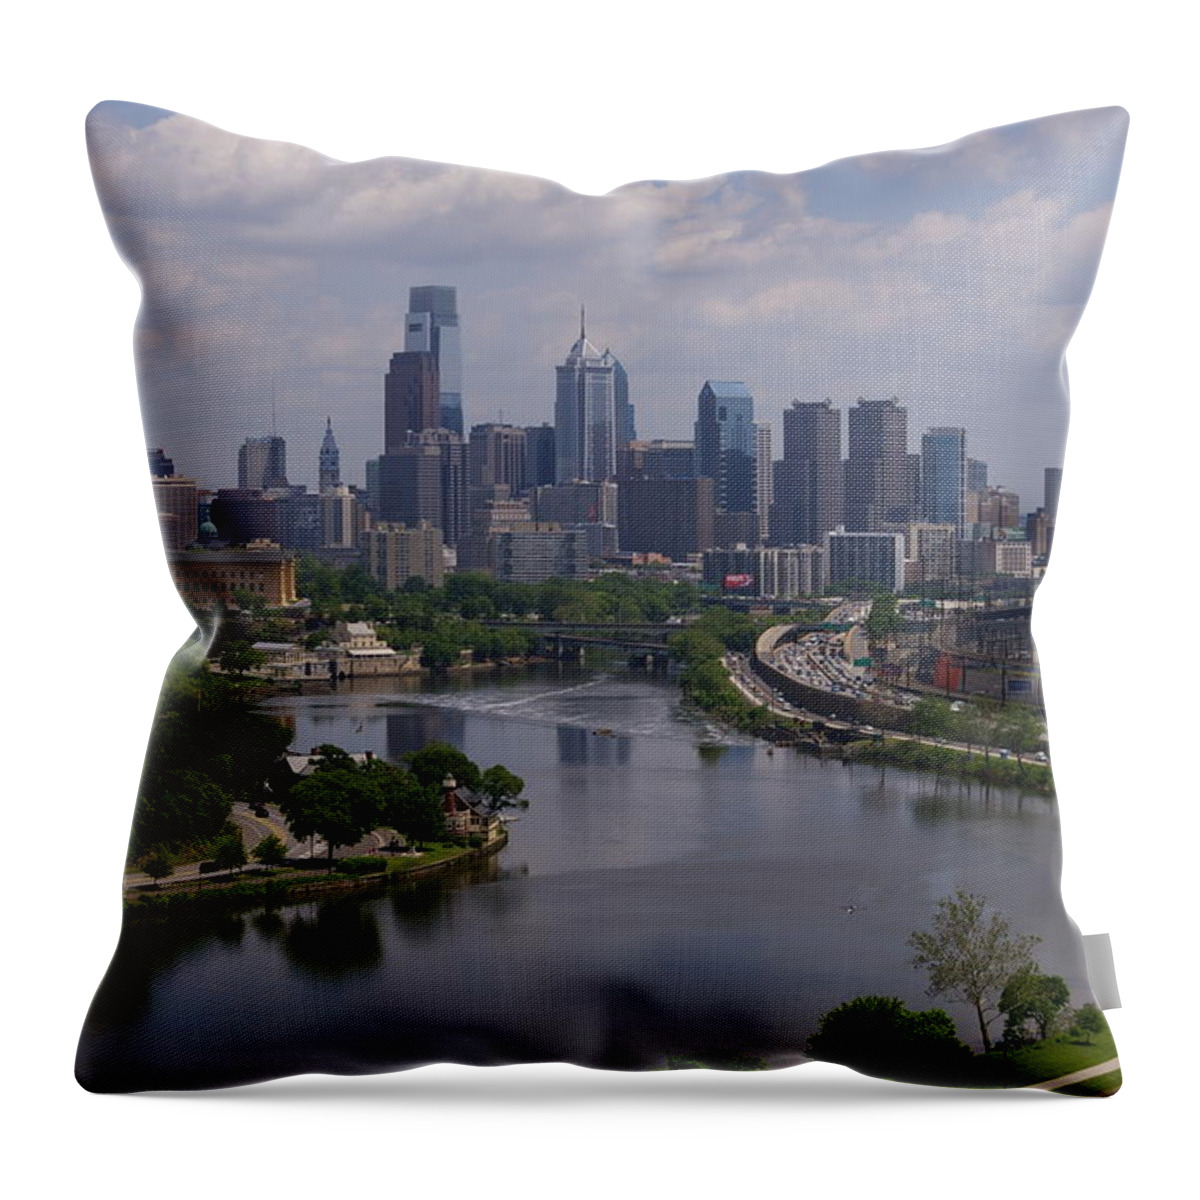 Philadelphia Throw Pillow featuring the photograph Philadephia by Jennifer Dienes